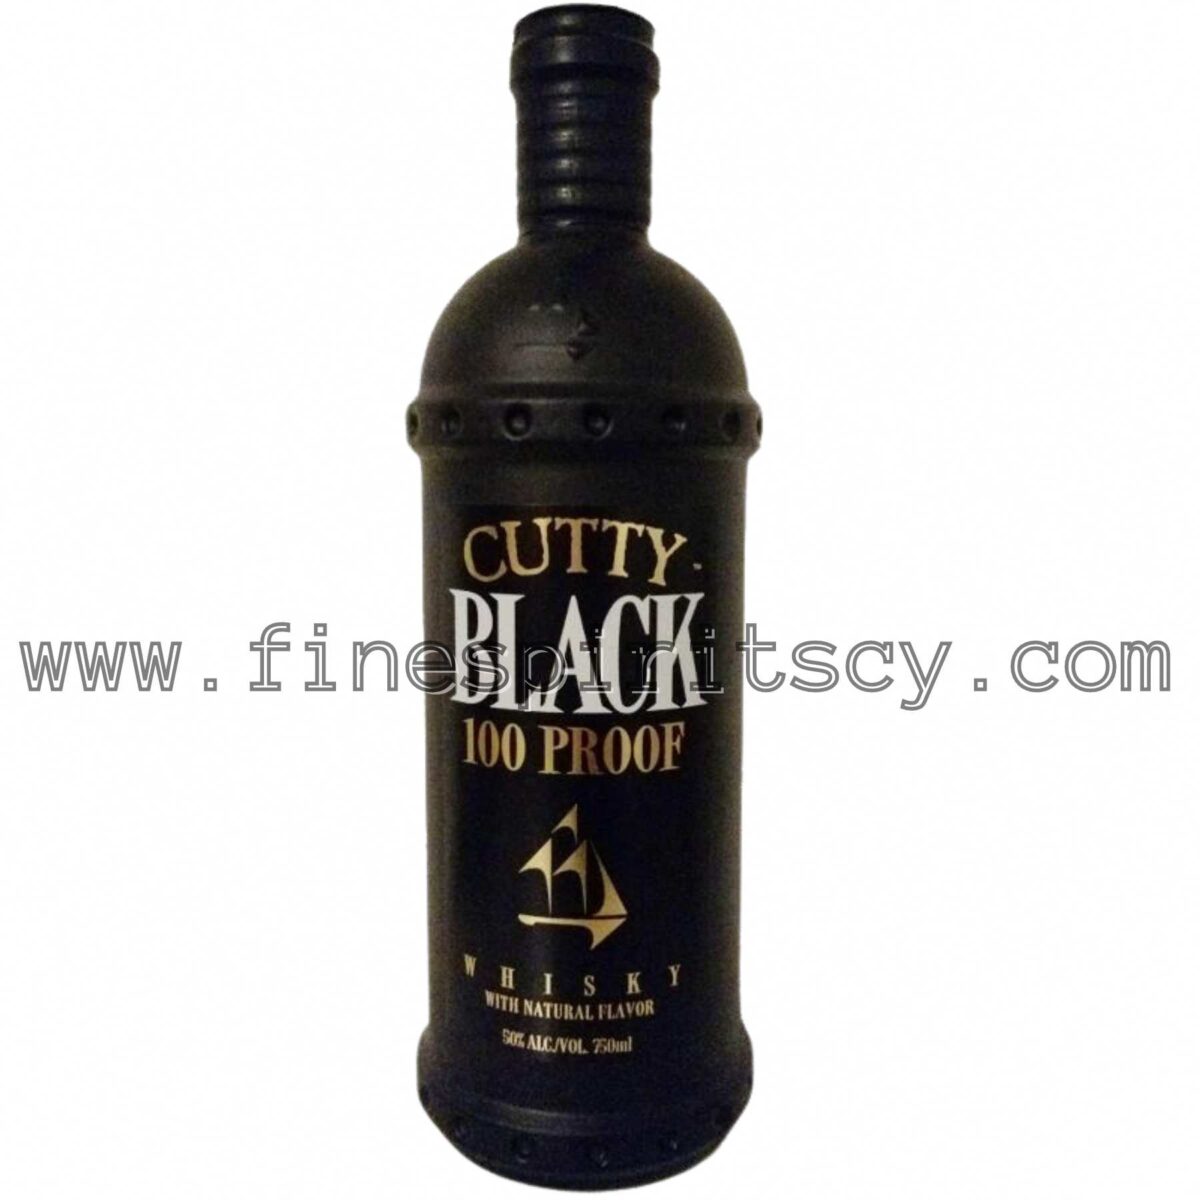 Cutty Black 100 proof Whisky Cyprus Price 750ml 75cl 0.75L FSCY Online order europe